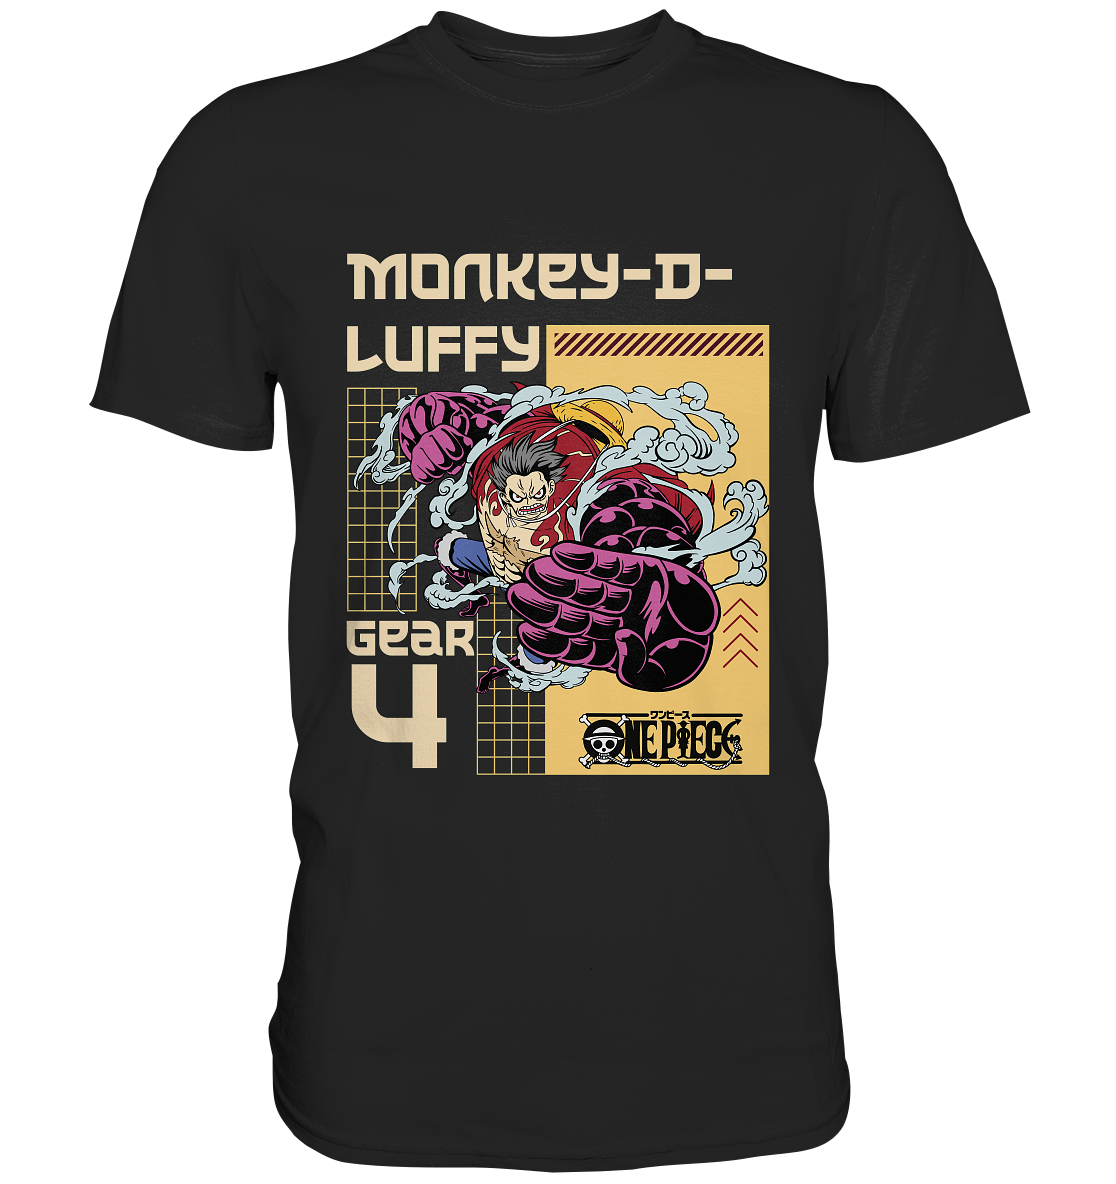 Monkey D Luffy. Japanese Anime - Premium Shirt